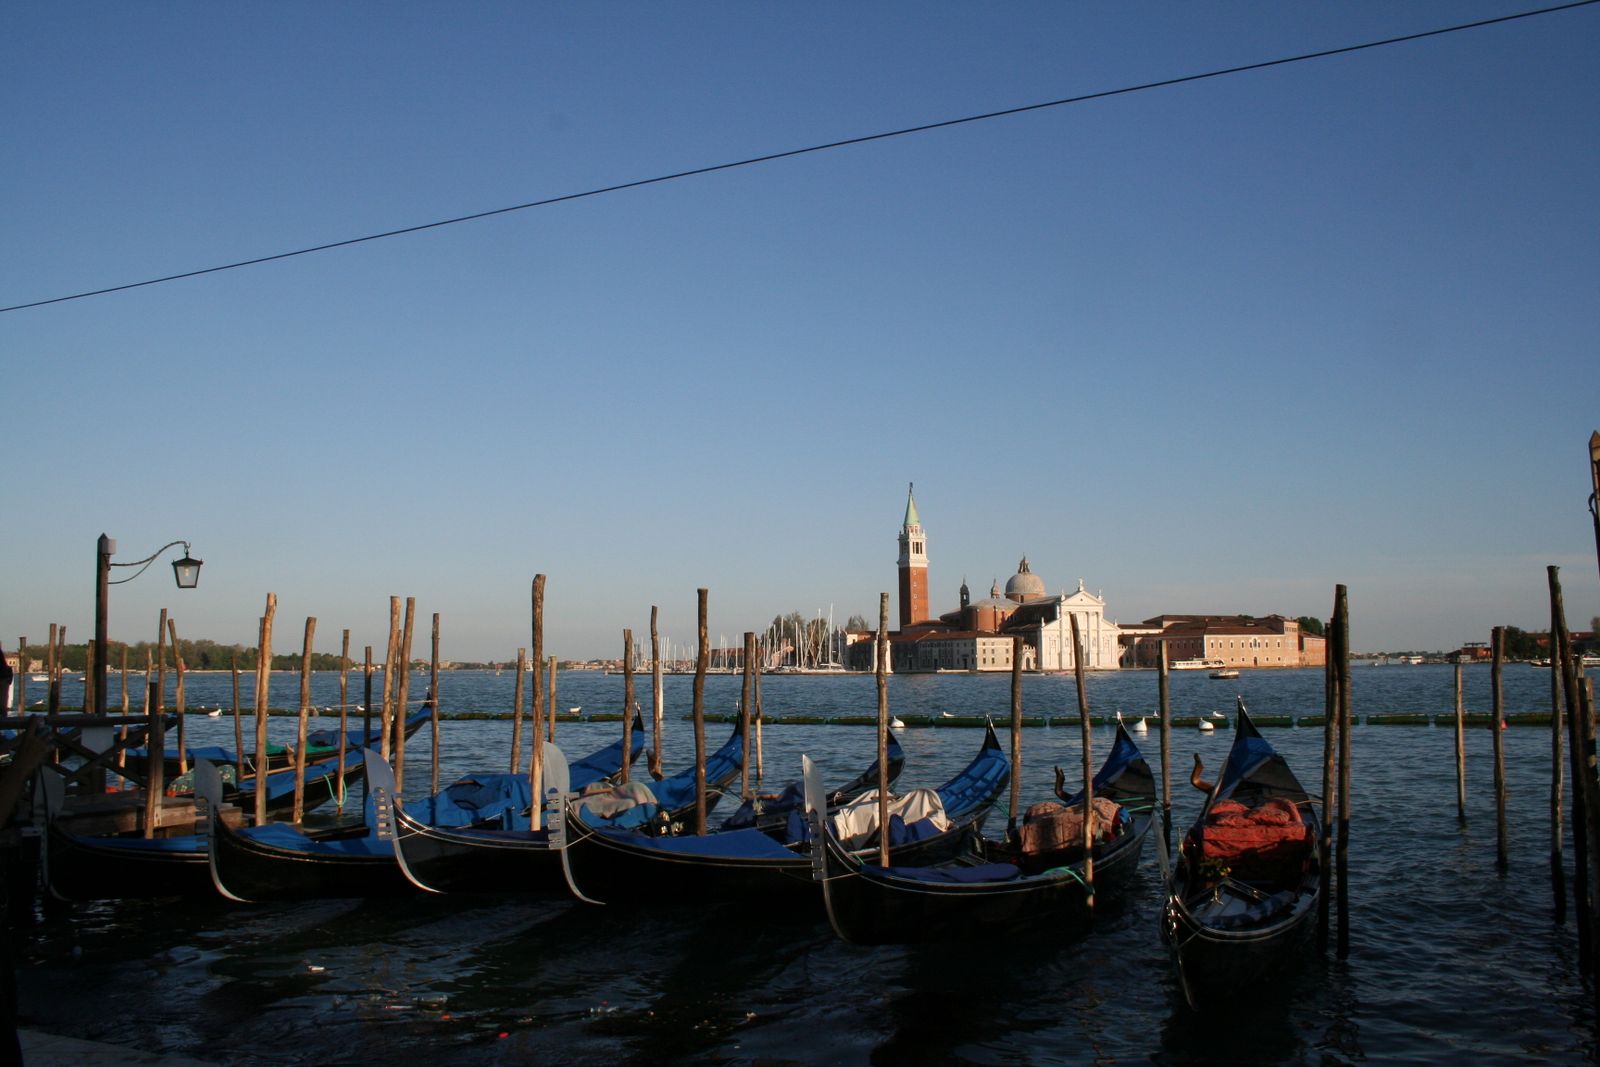 Docked boats in Venice